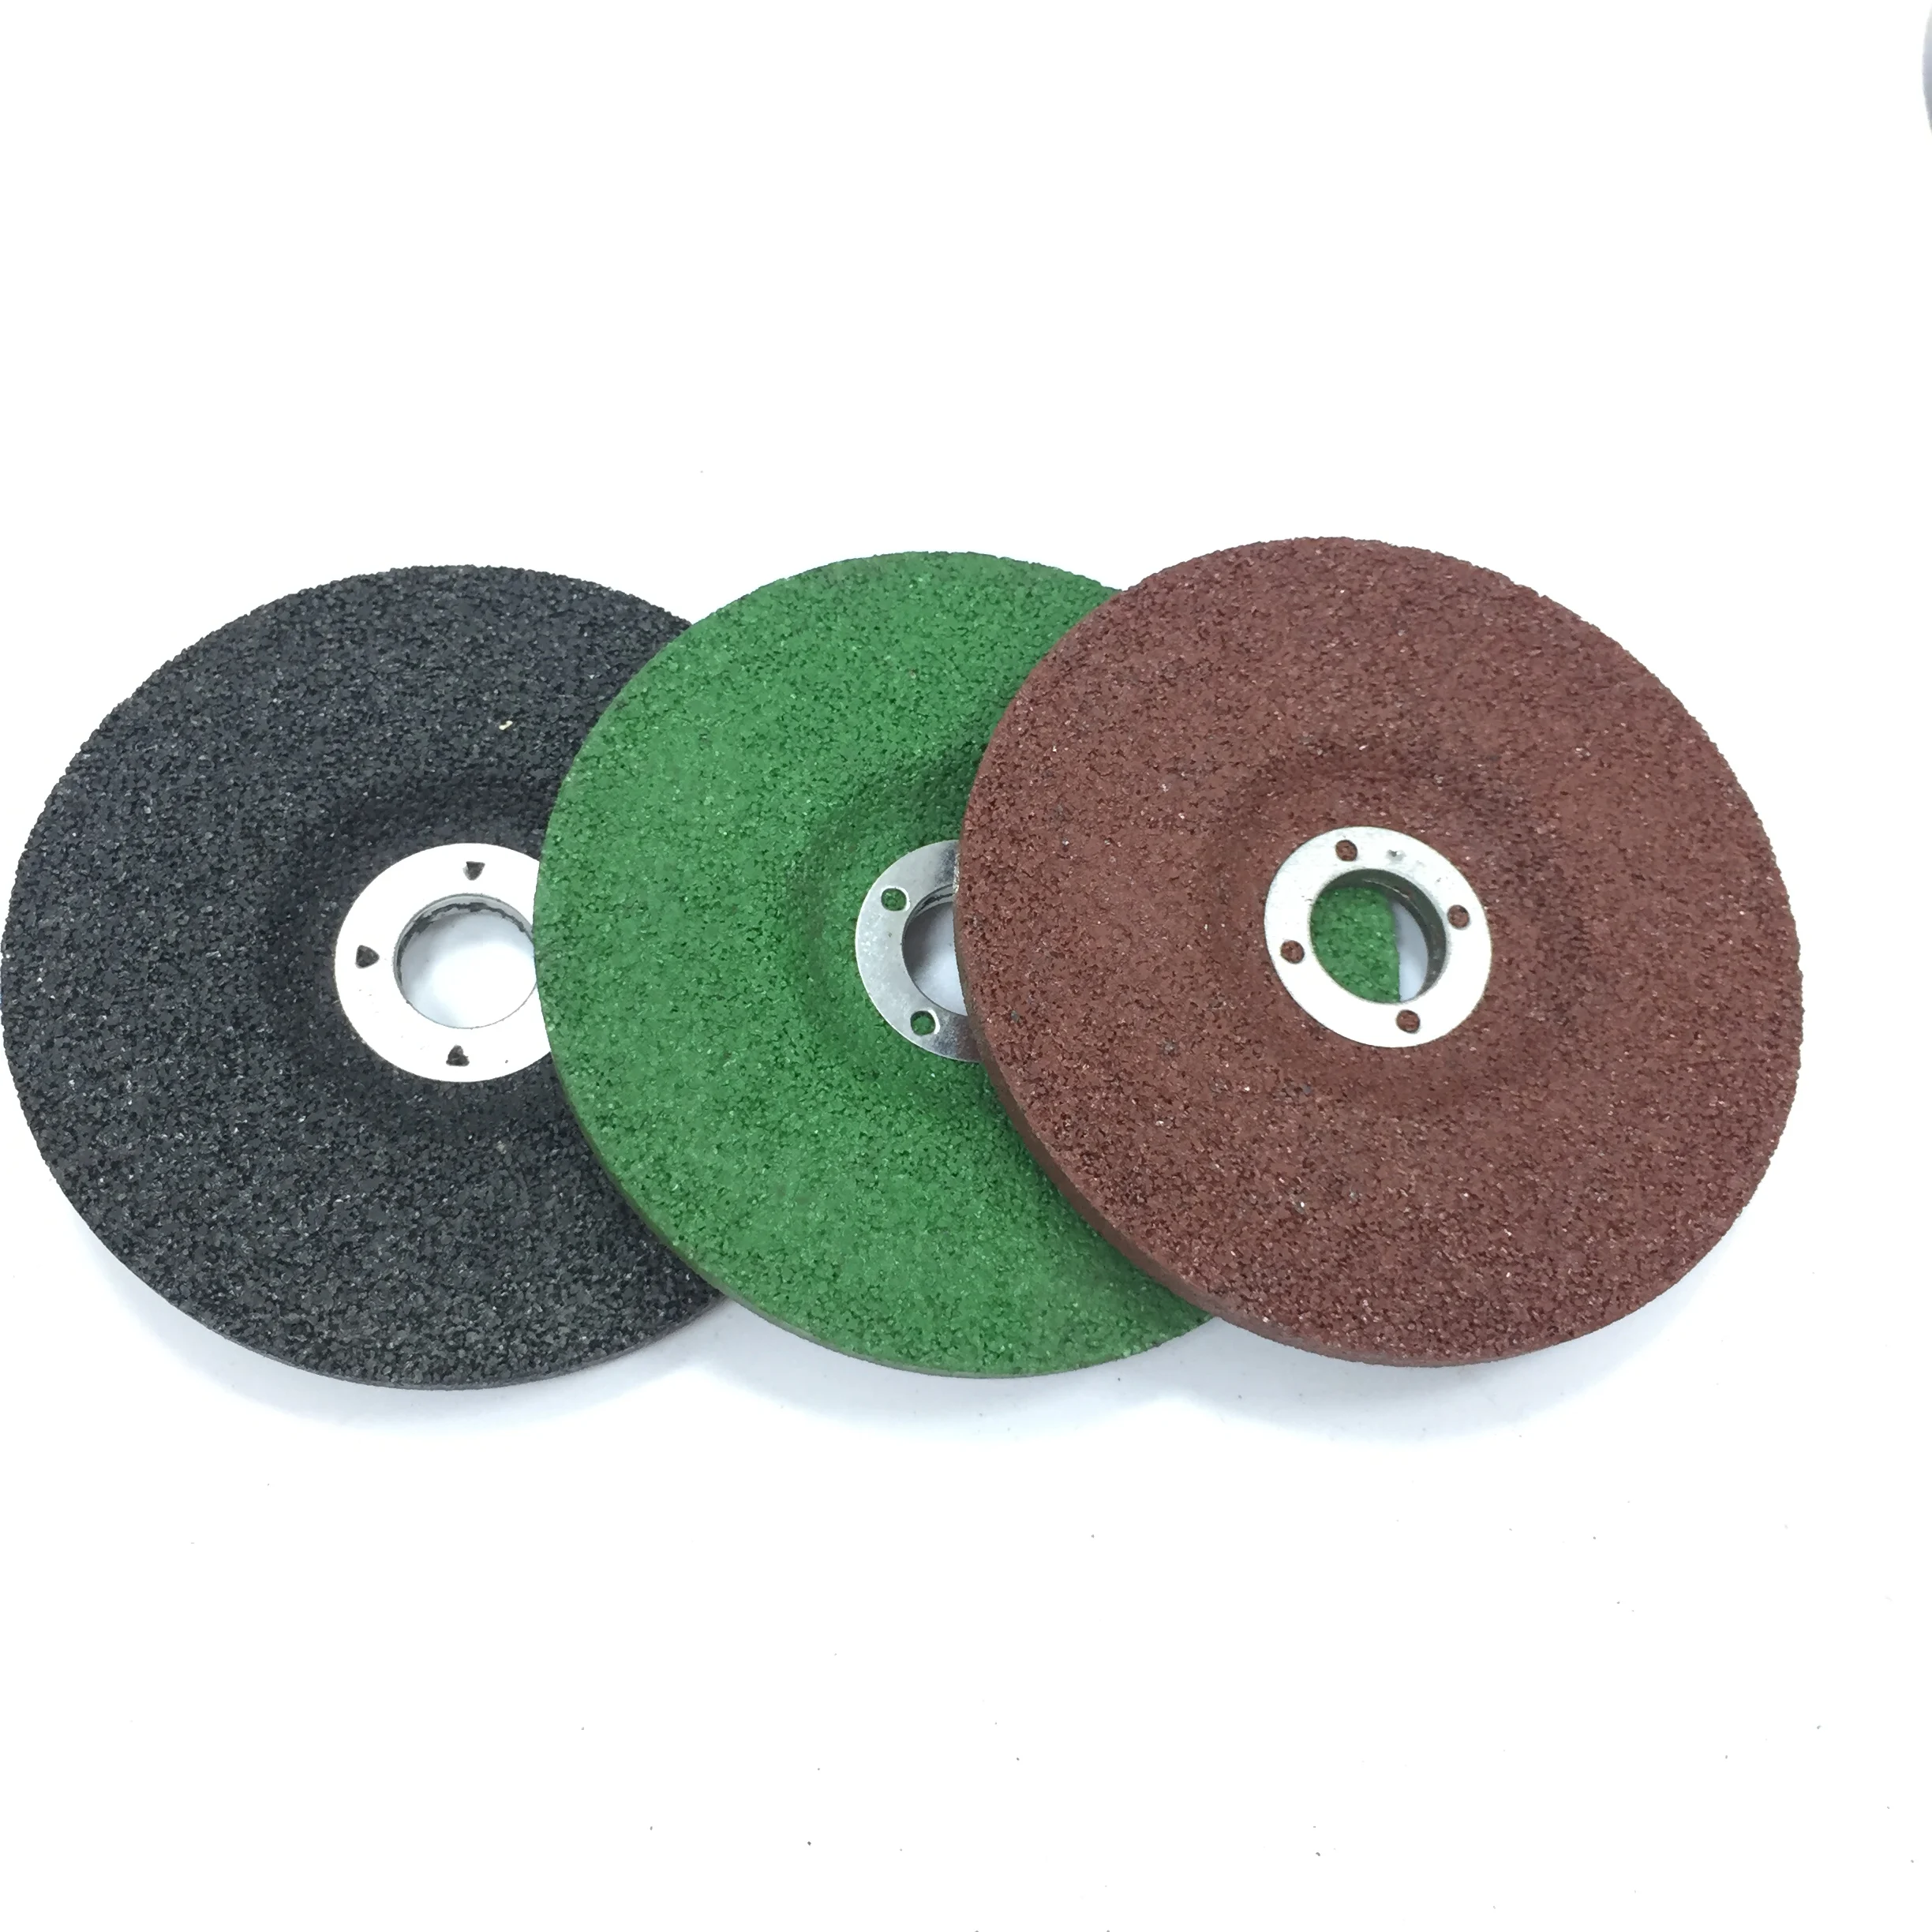 

RTS 4inch 7inchx6x16mm aluminium oxide resin high quality porosity mini bevel edge angle inox grinding wheel disc price, Black green red